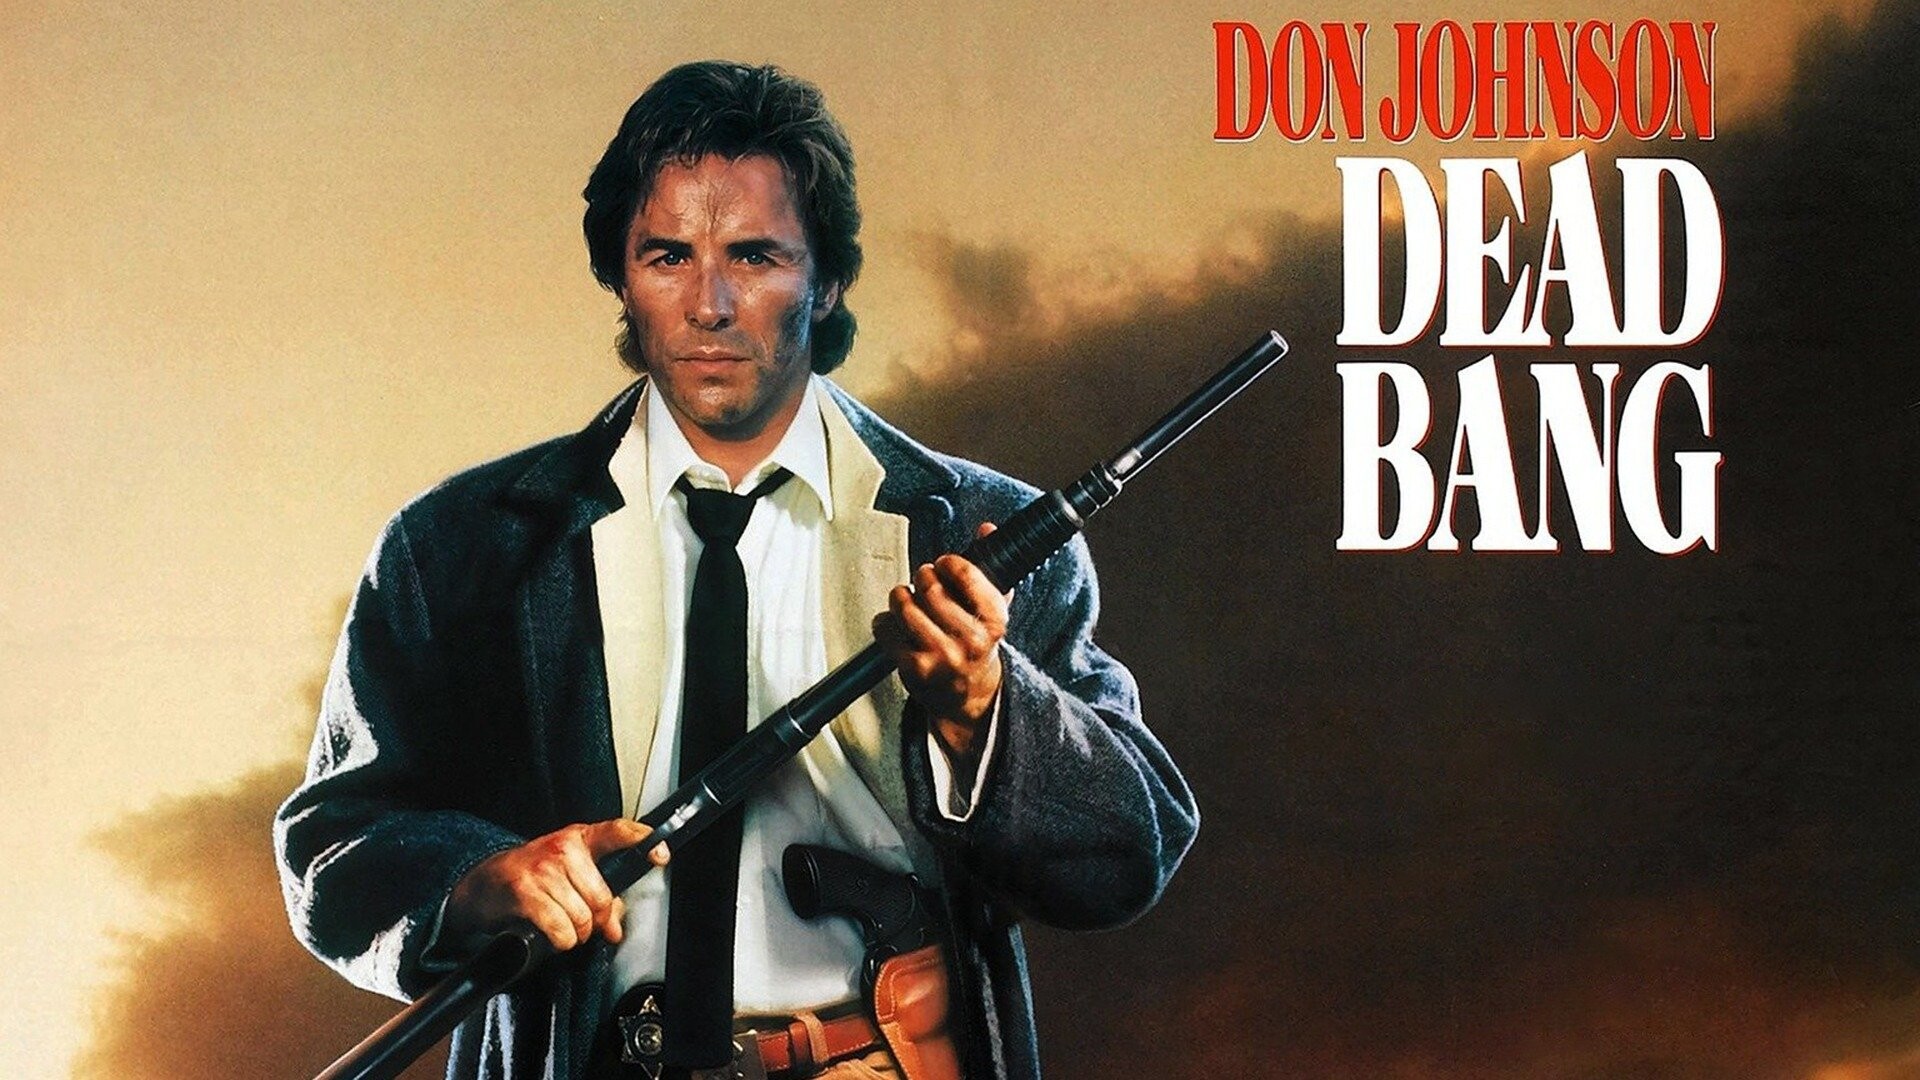 Don Johnson: Dead Bang, 1989, An American action thriller film, Directed by John Frankenheimer, LASD Detective Jerry Beck. 1920x1080 Full HD Wallpaper.